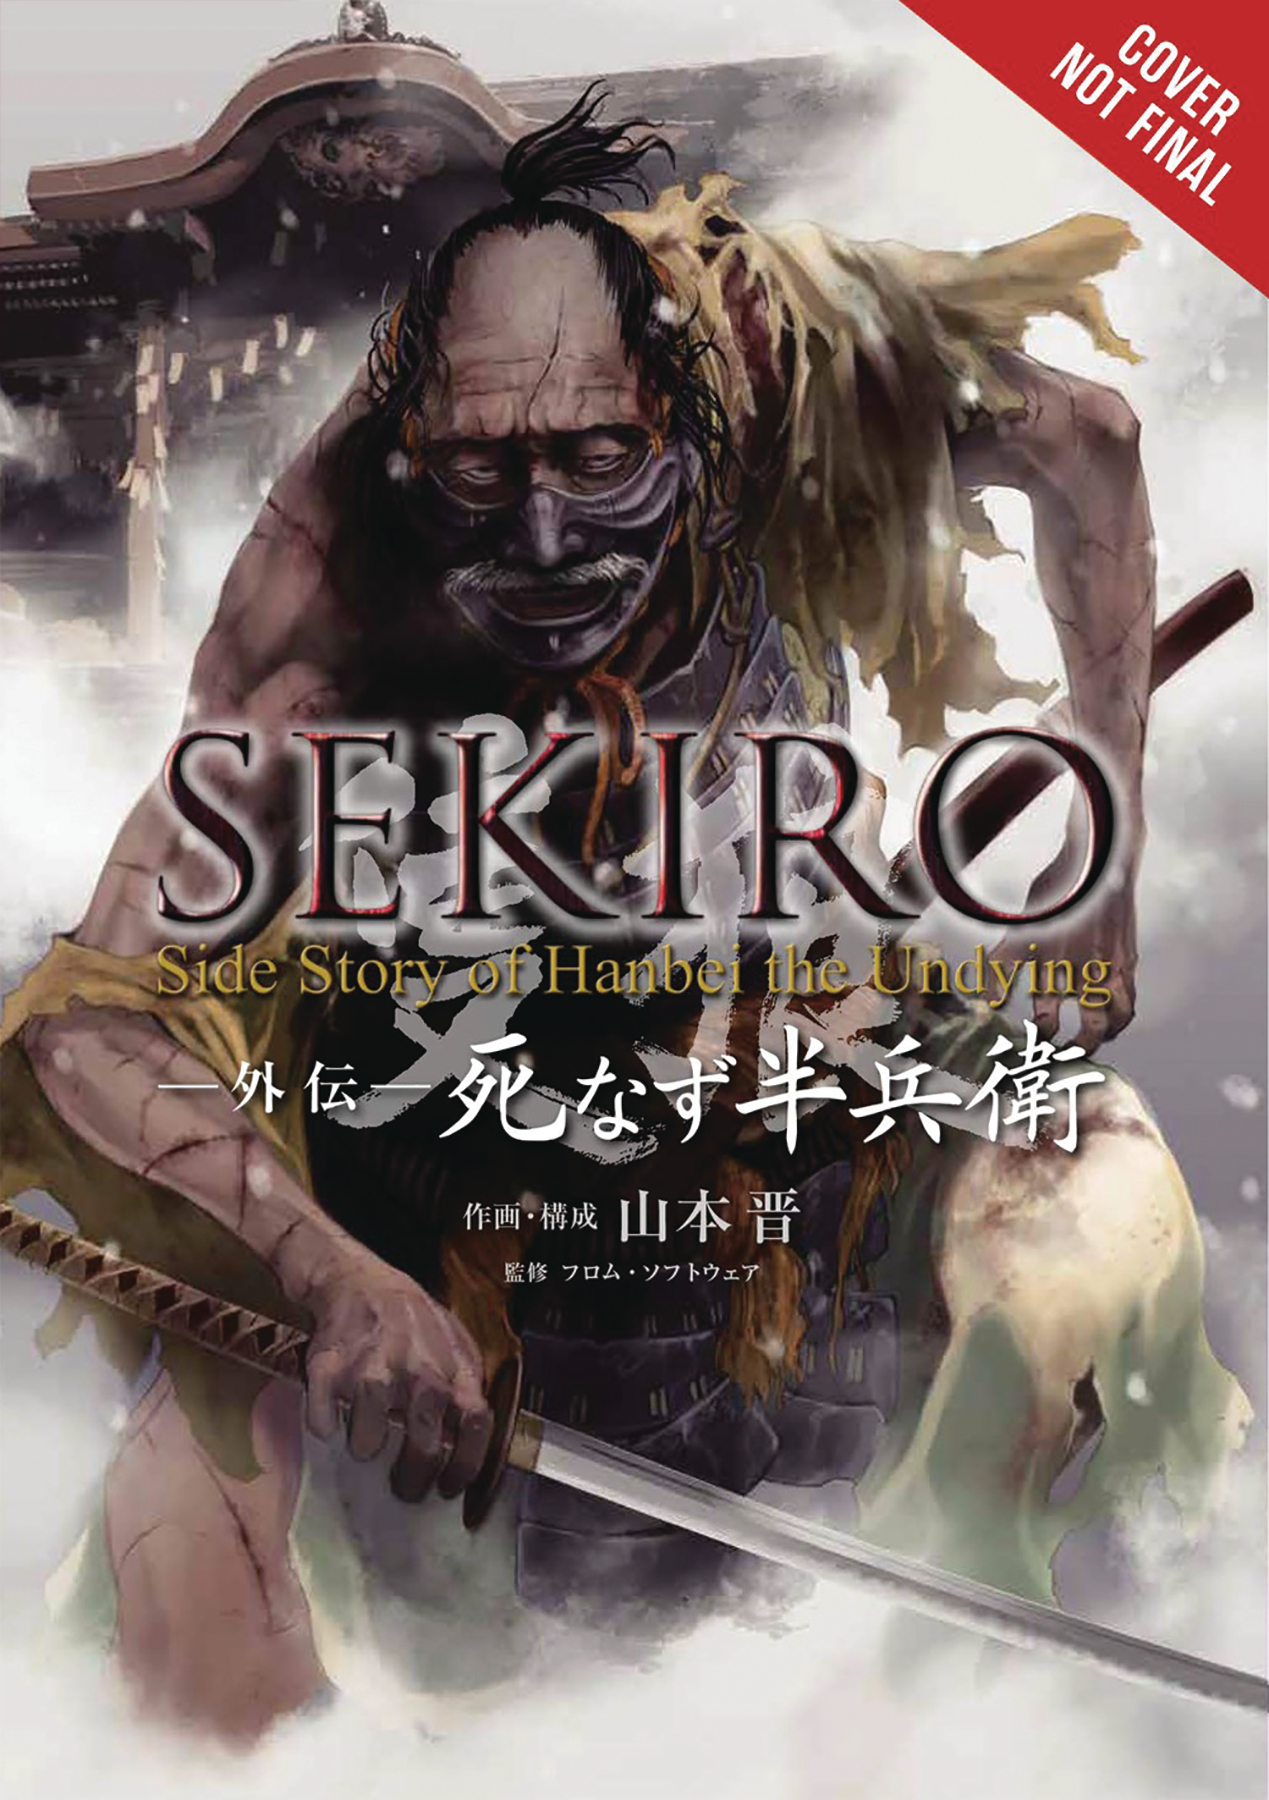 Sekiro Side Story Hanbei The Undying By Shin Yamamoto Published By Yen Press Forbiddenplanet Com Uk And Worldwide Cult Entertainment Megastore